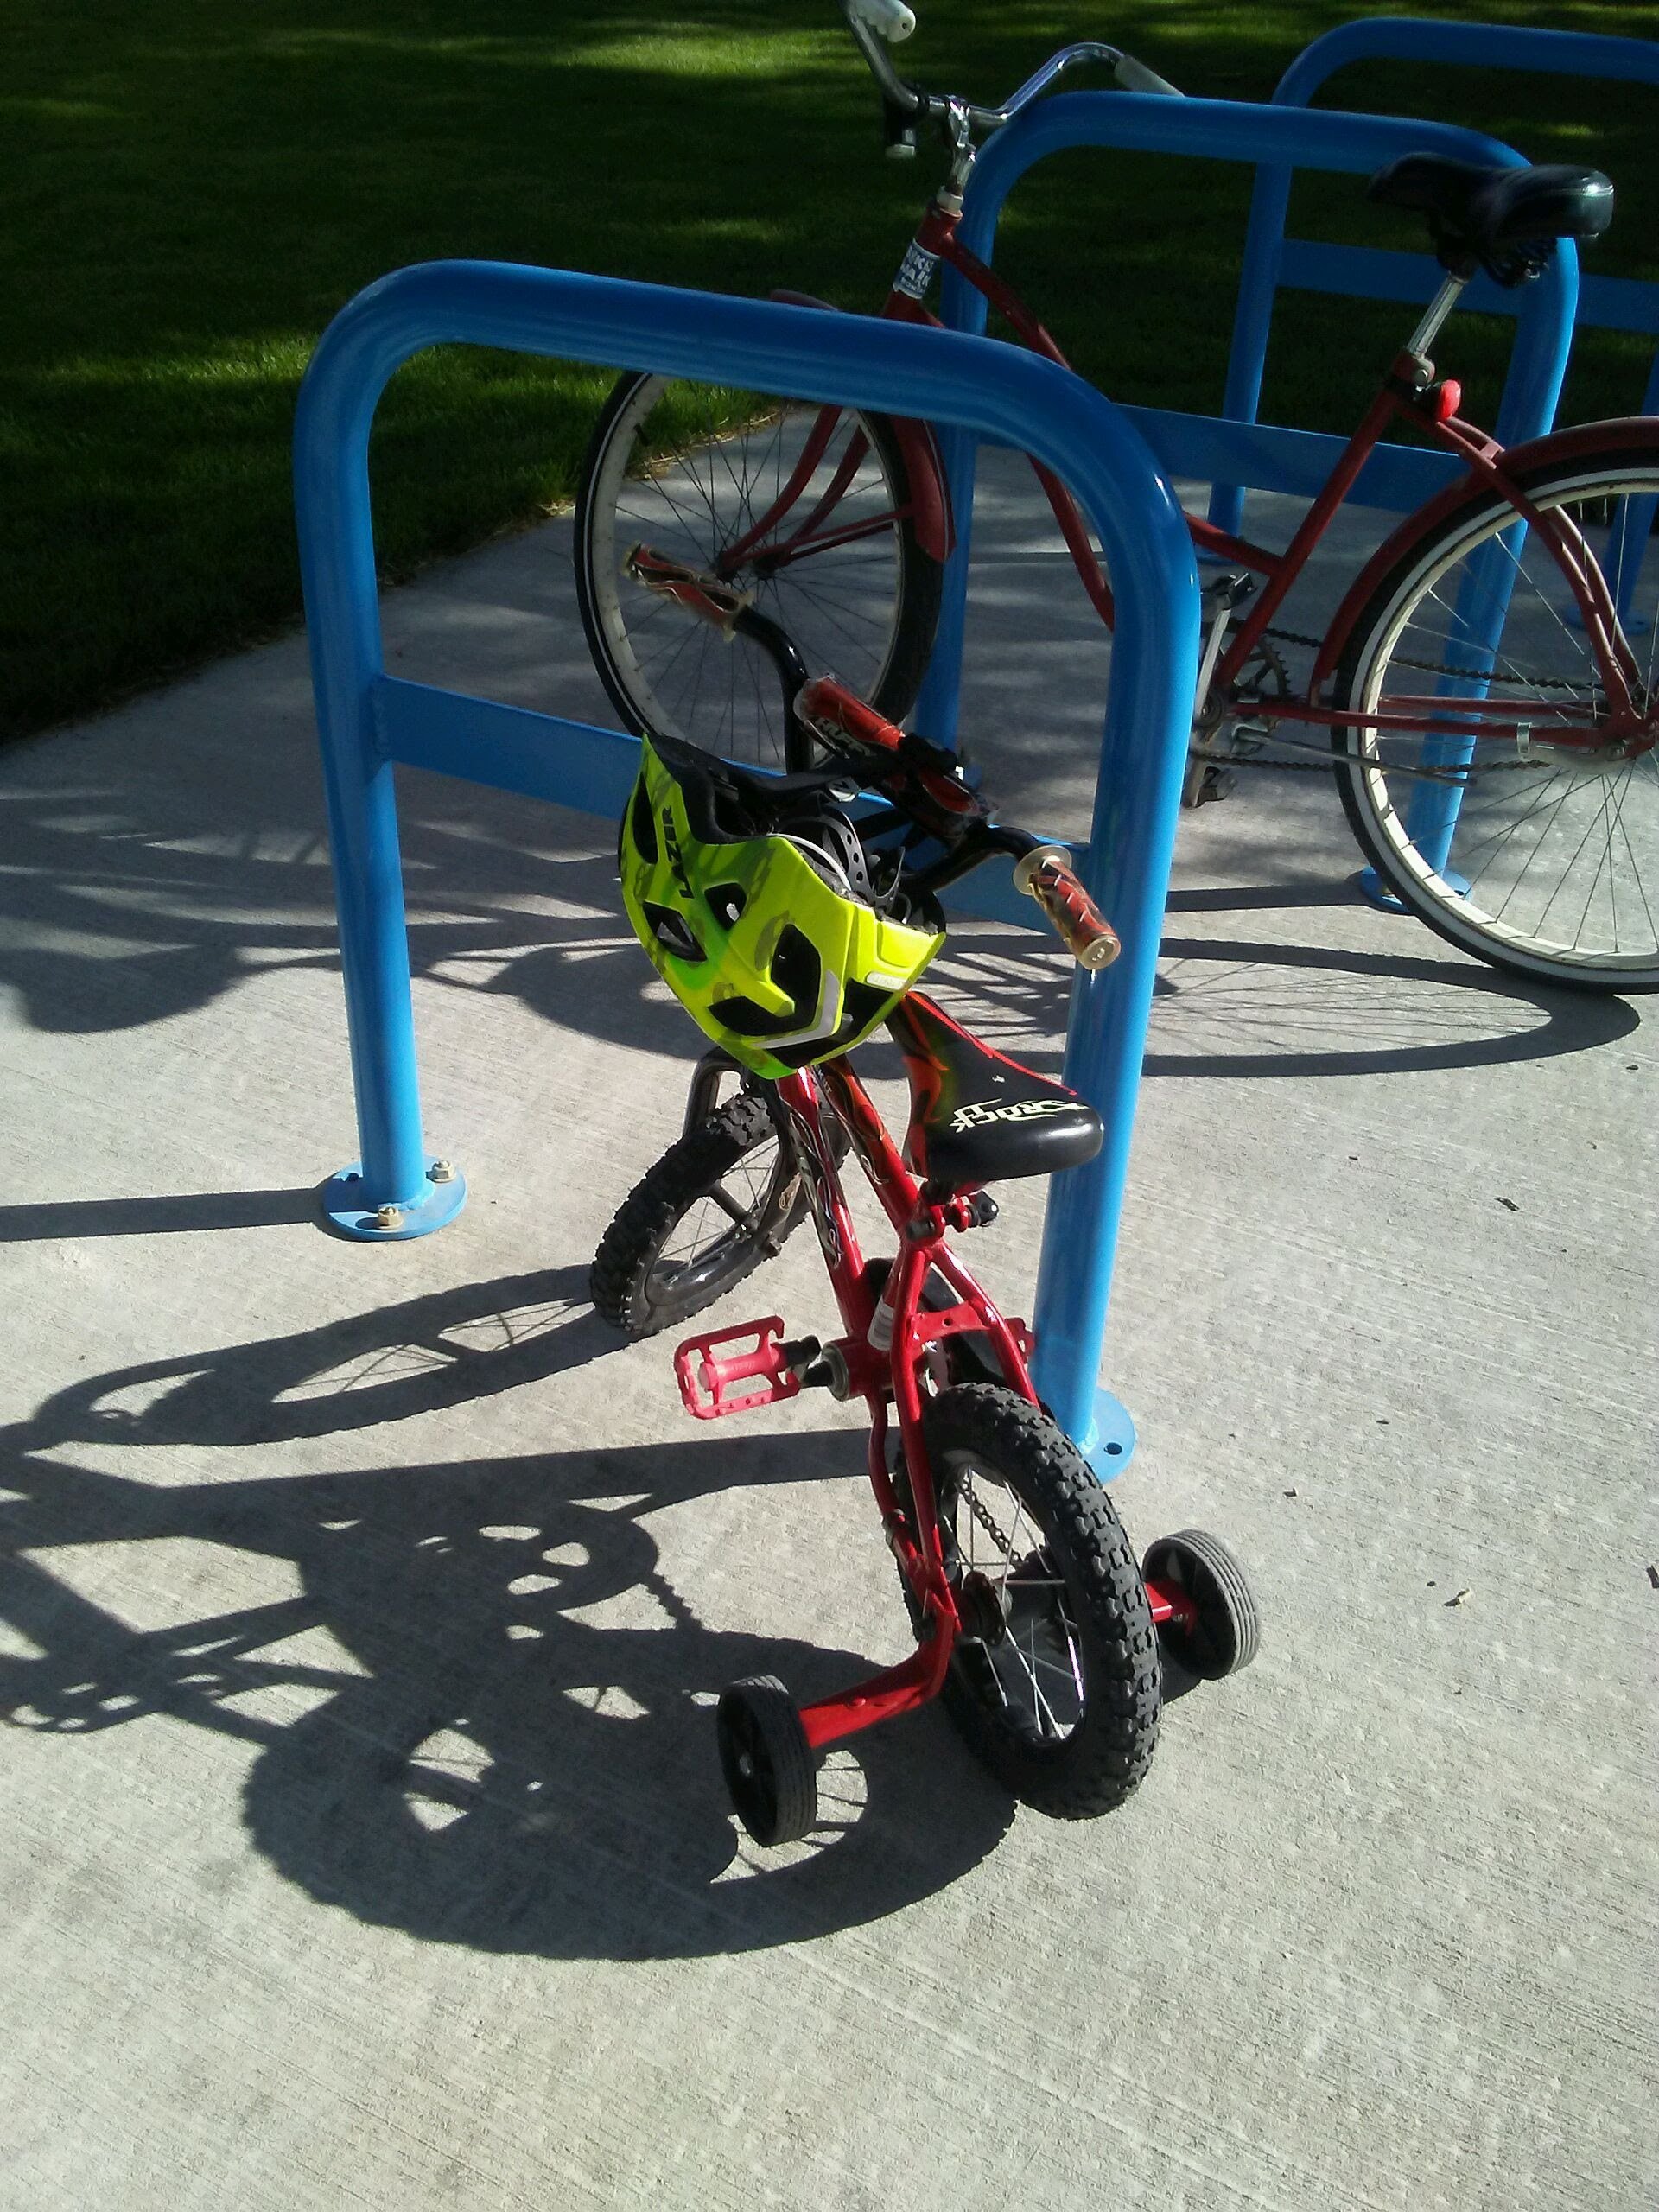 Kids' Bikes at Jaycee Park